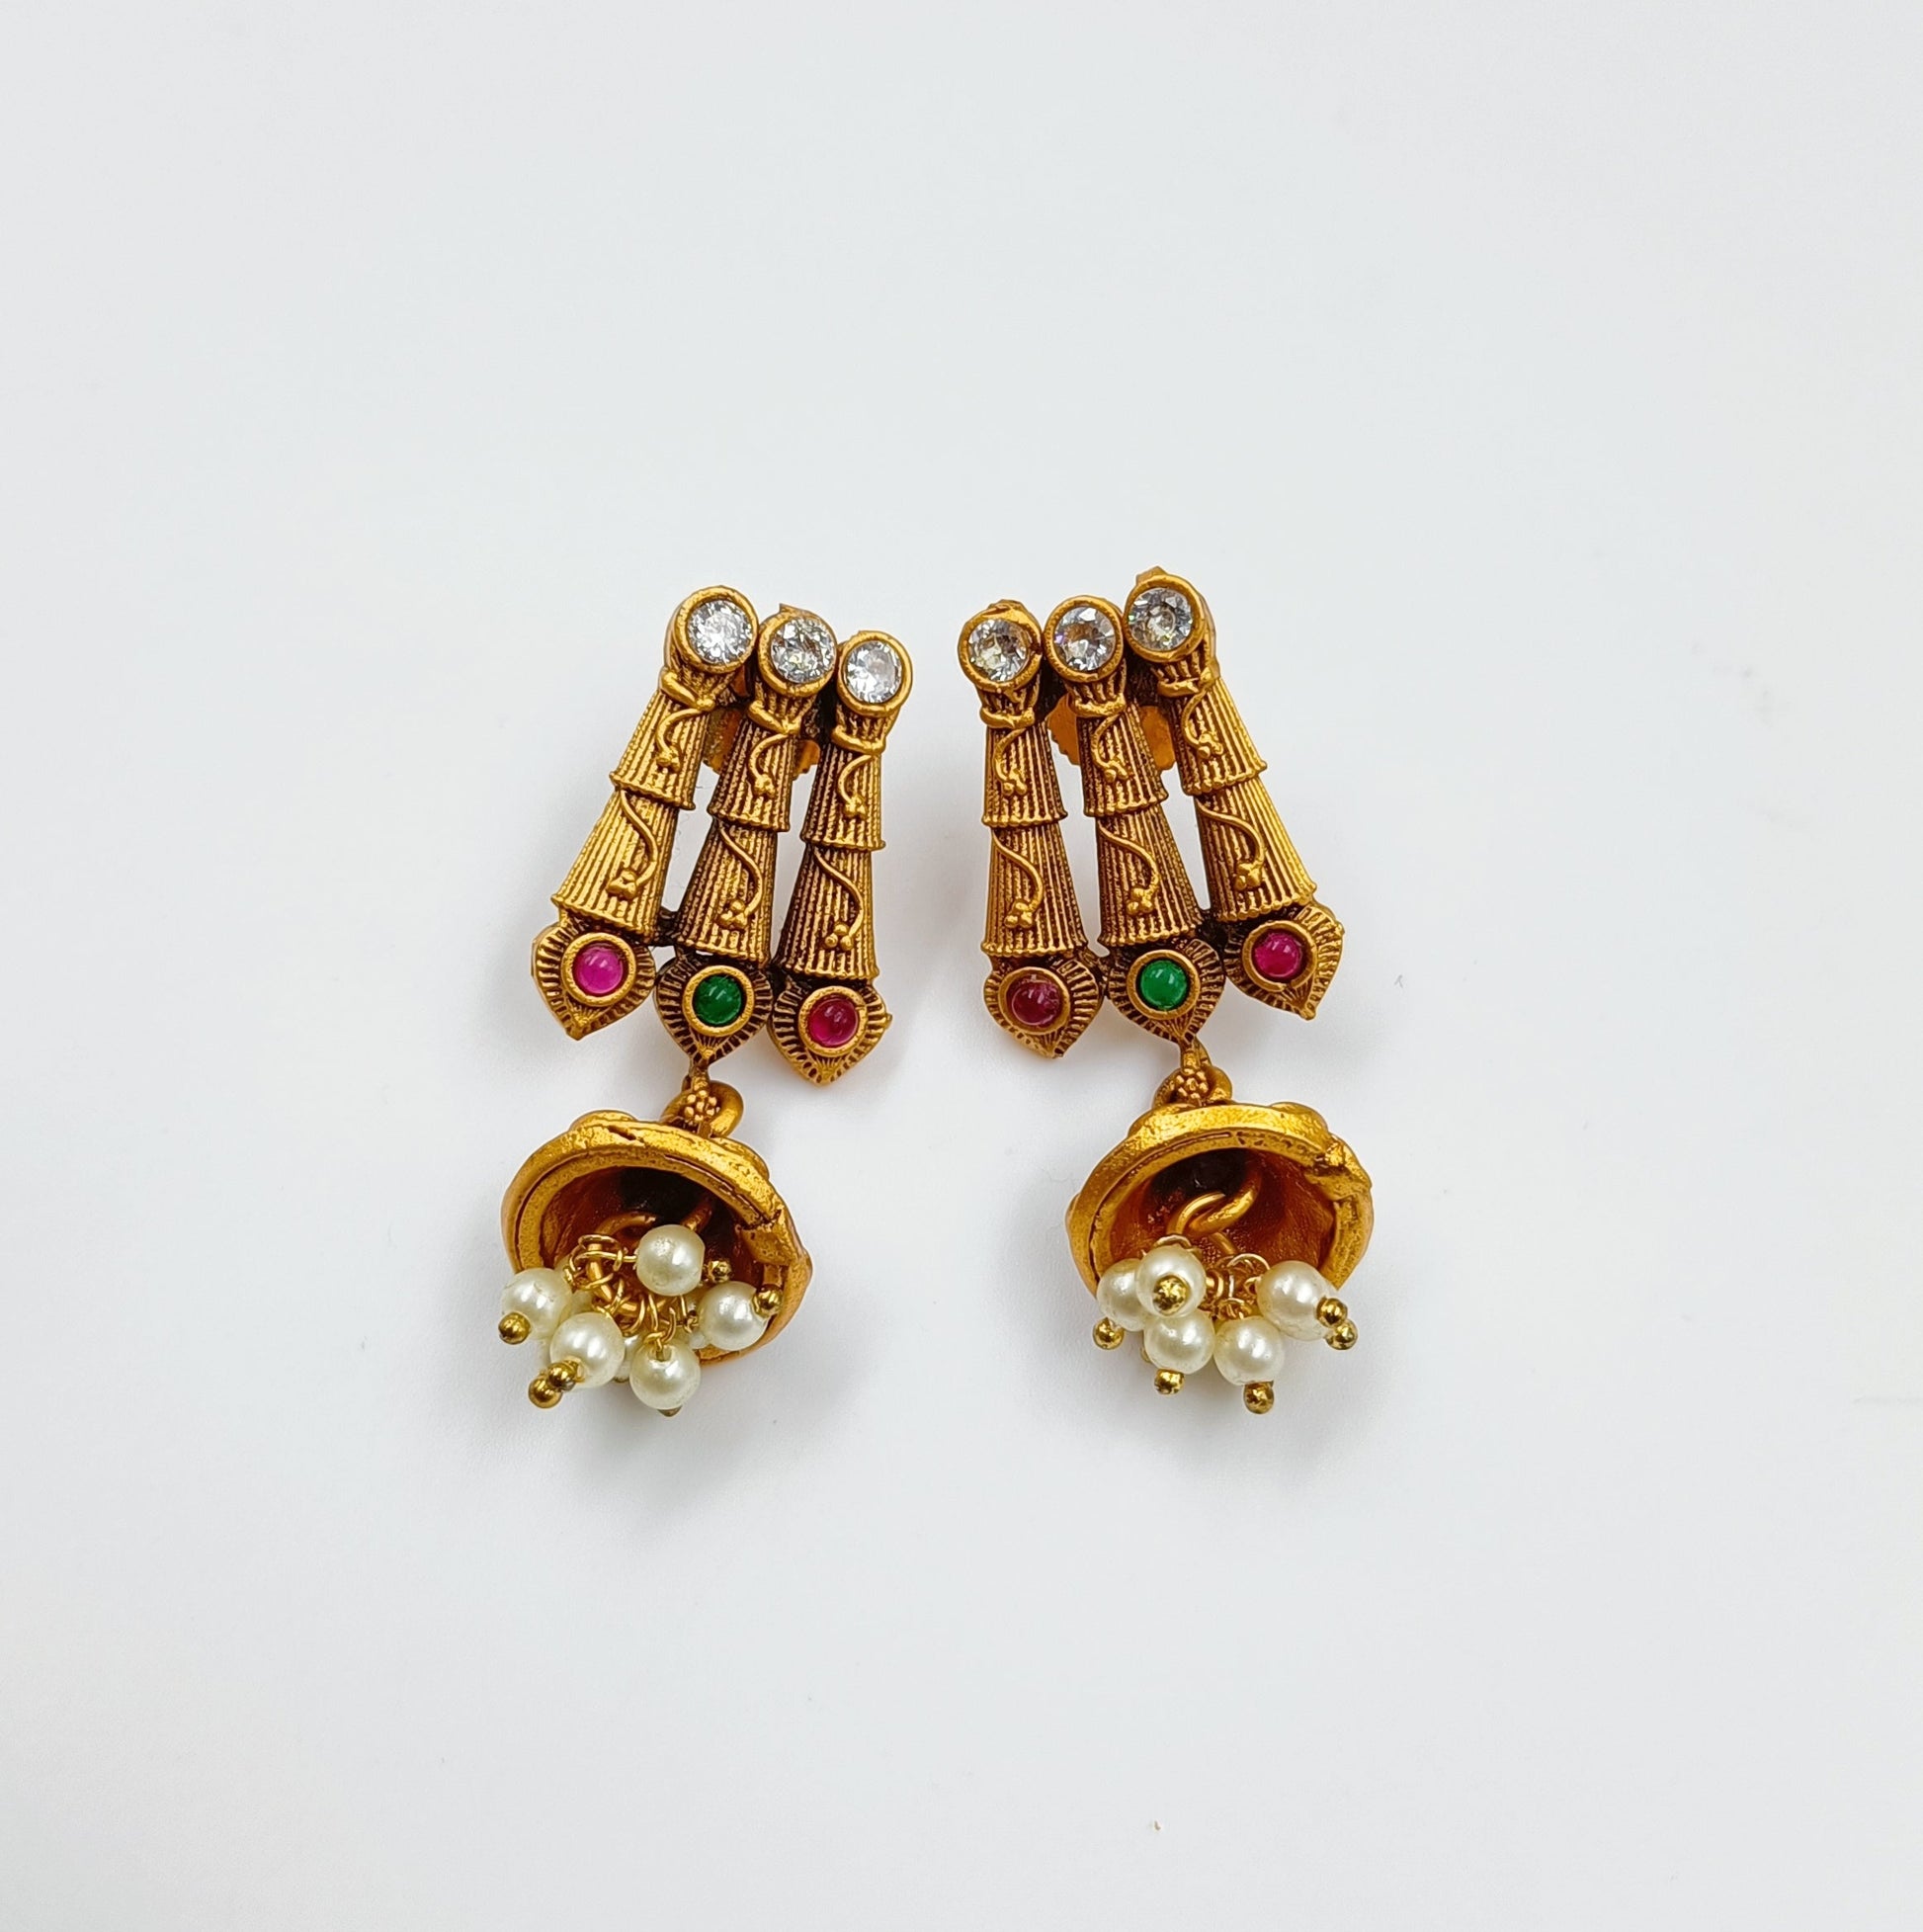 Multi Colour Temple Necklace Shree Radhe Pearls